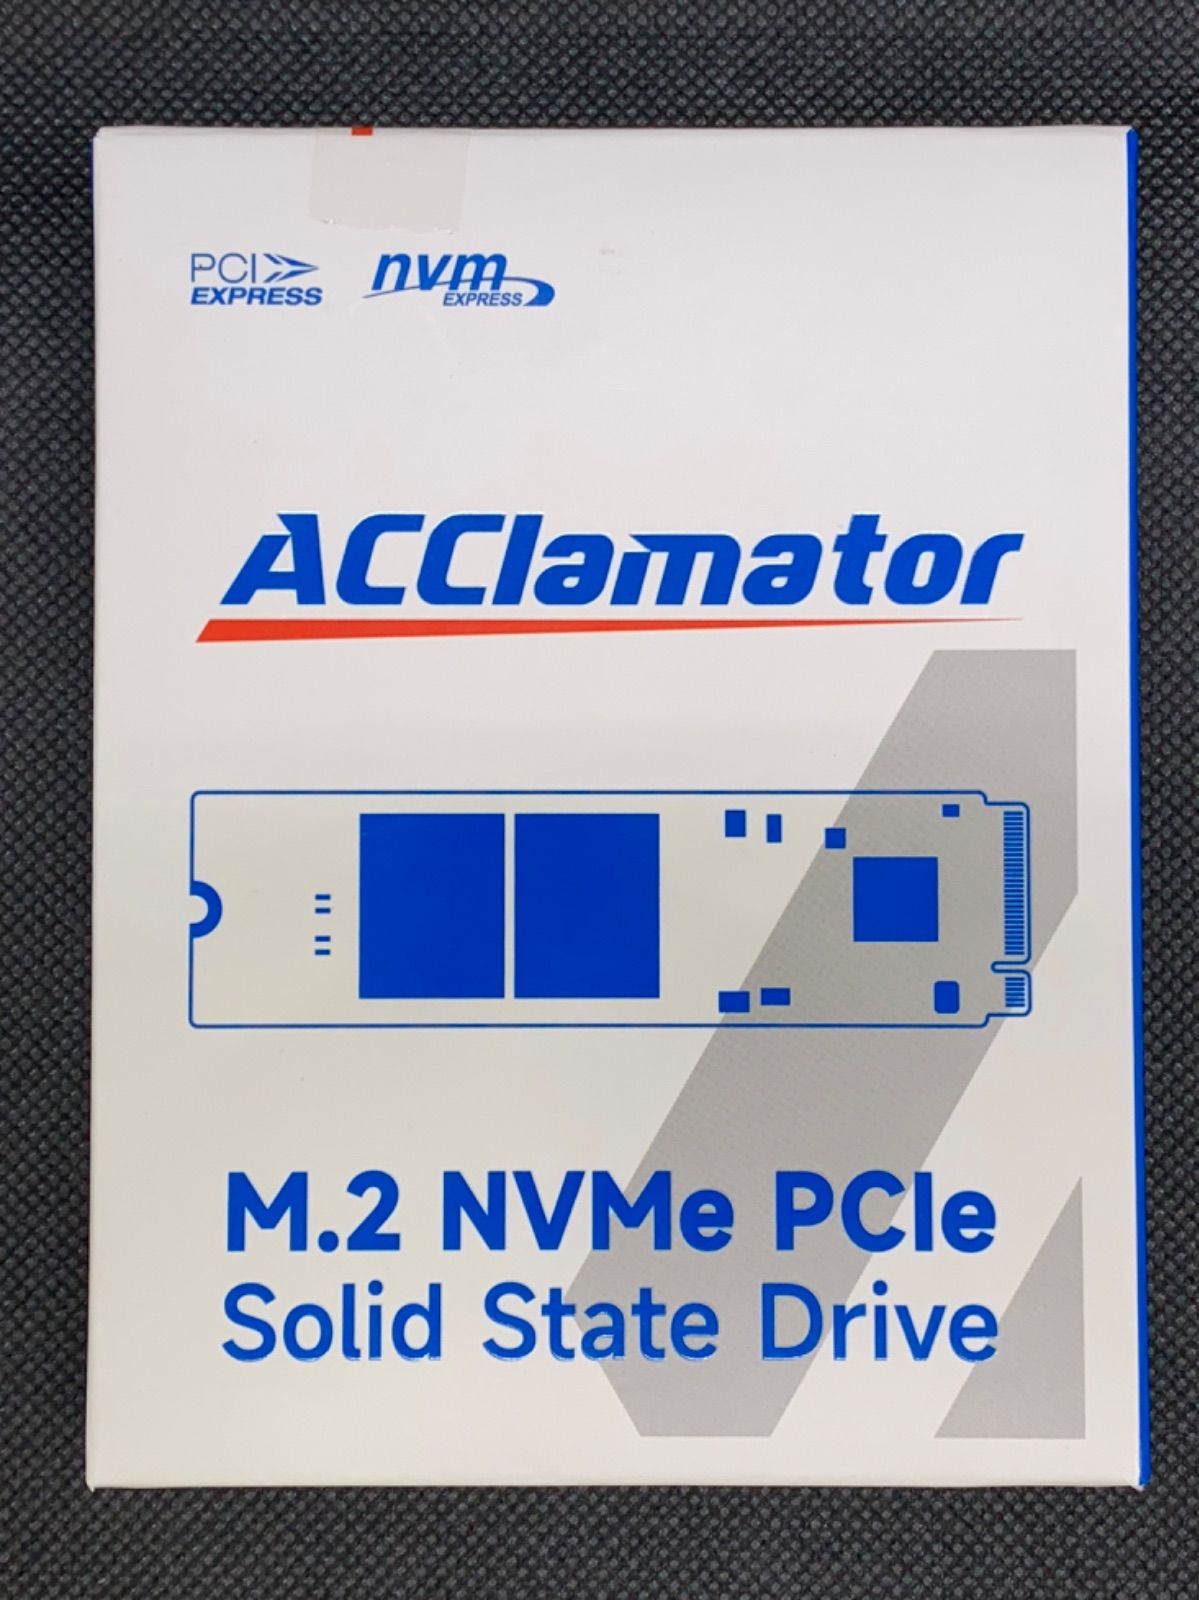 Acclamator N20 1TB SSD